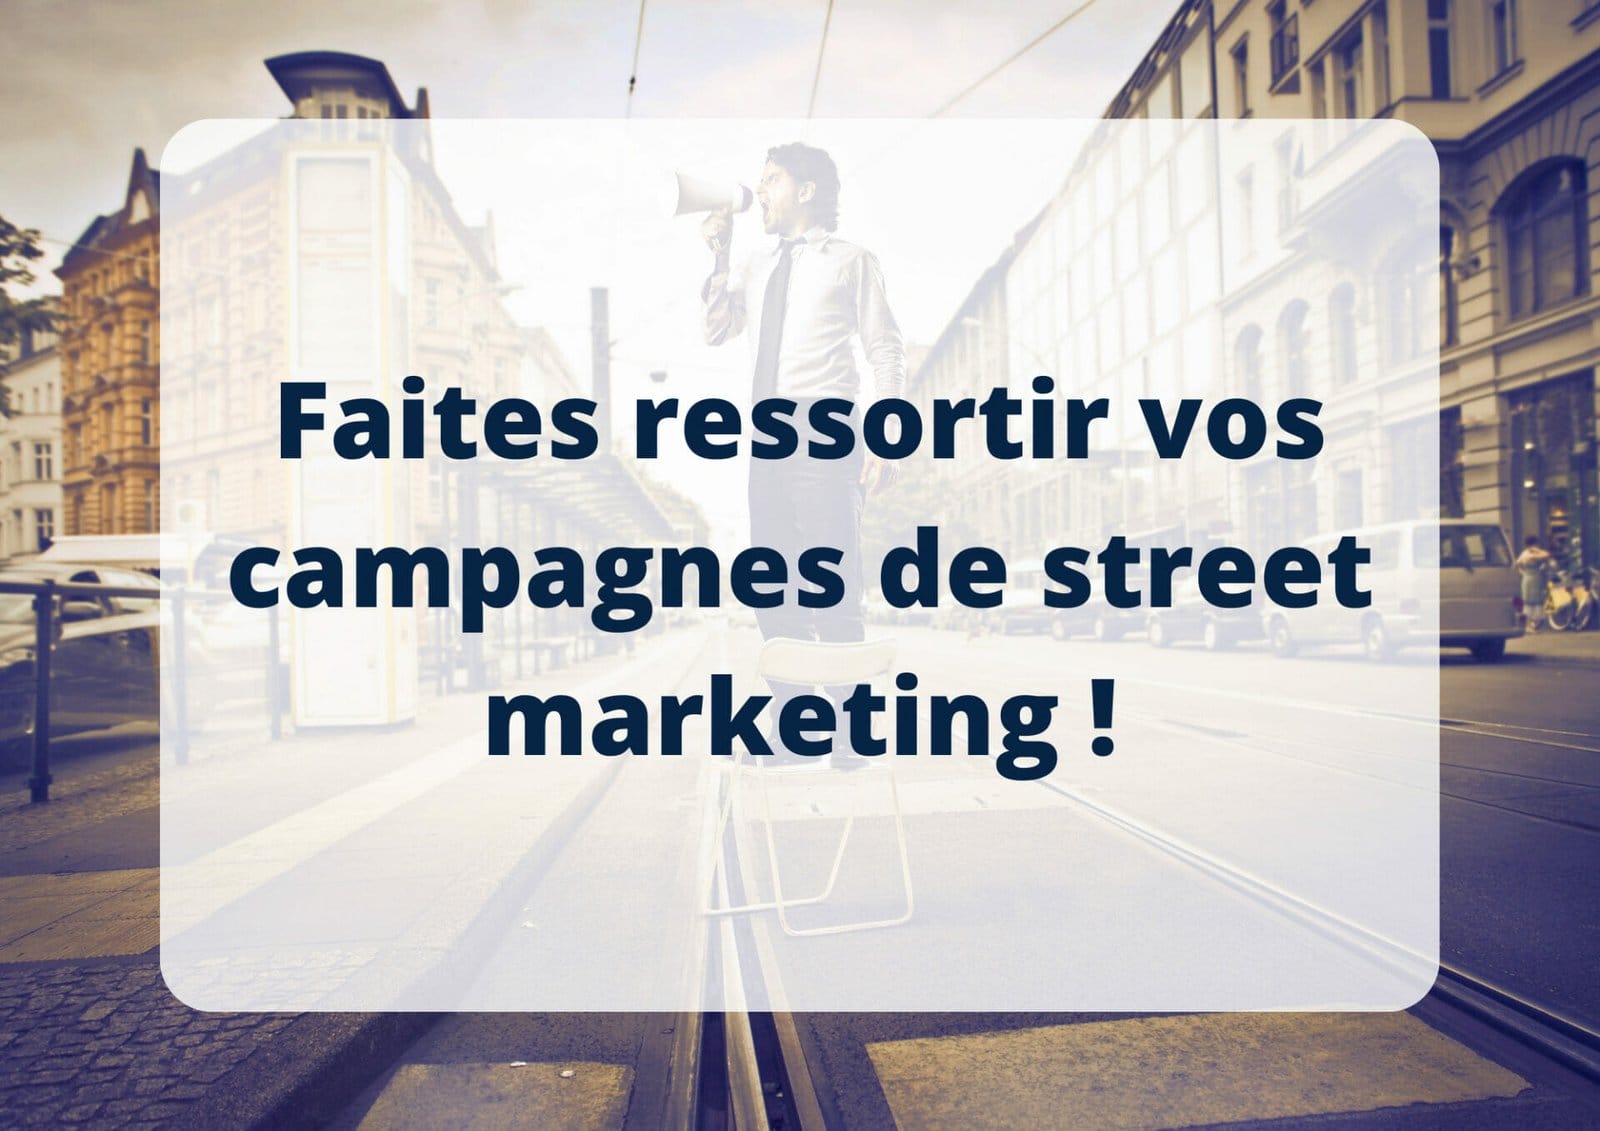 Faites ressortir vos campagnes de street marketing !